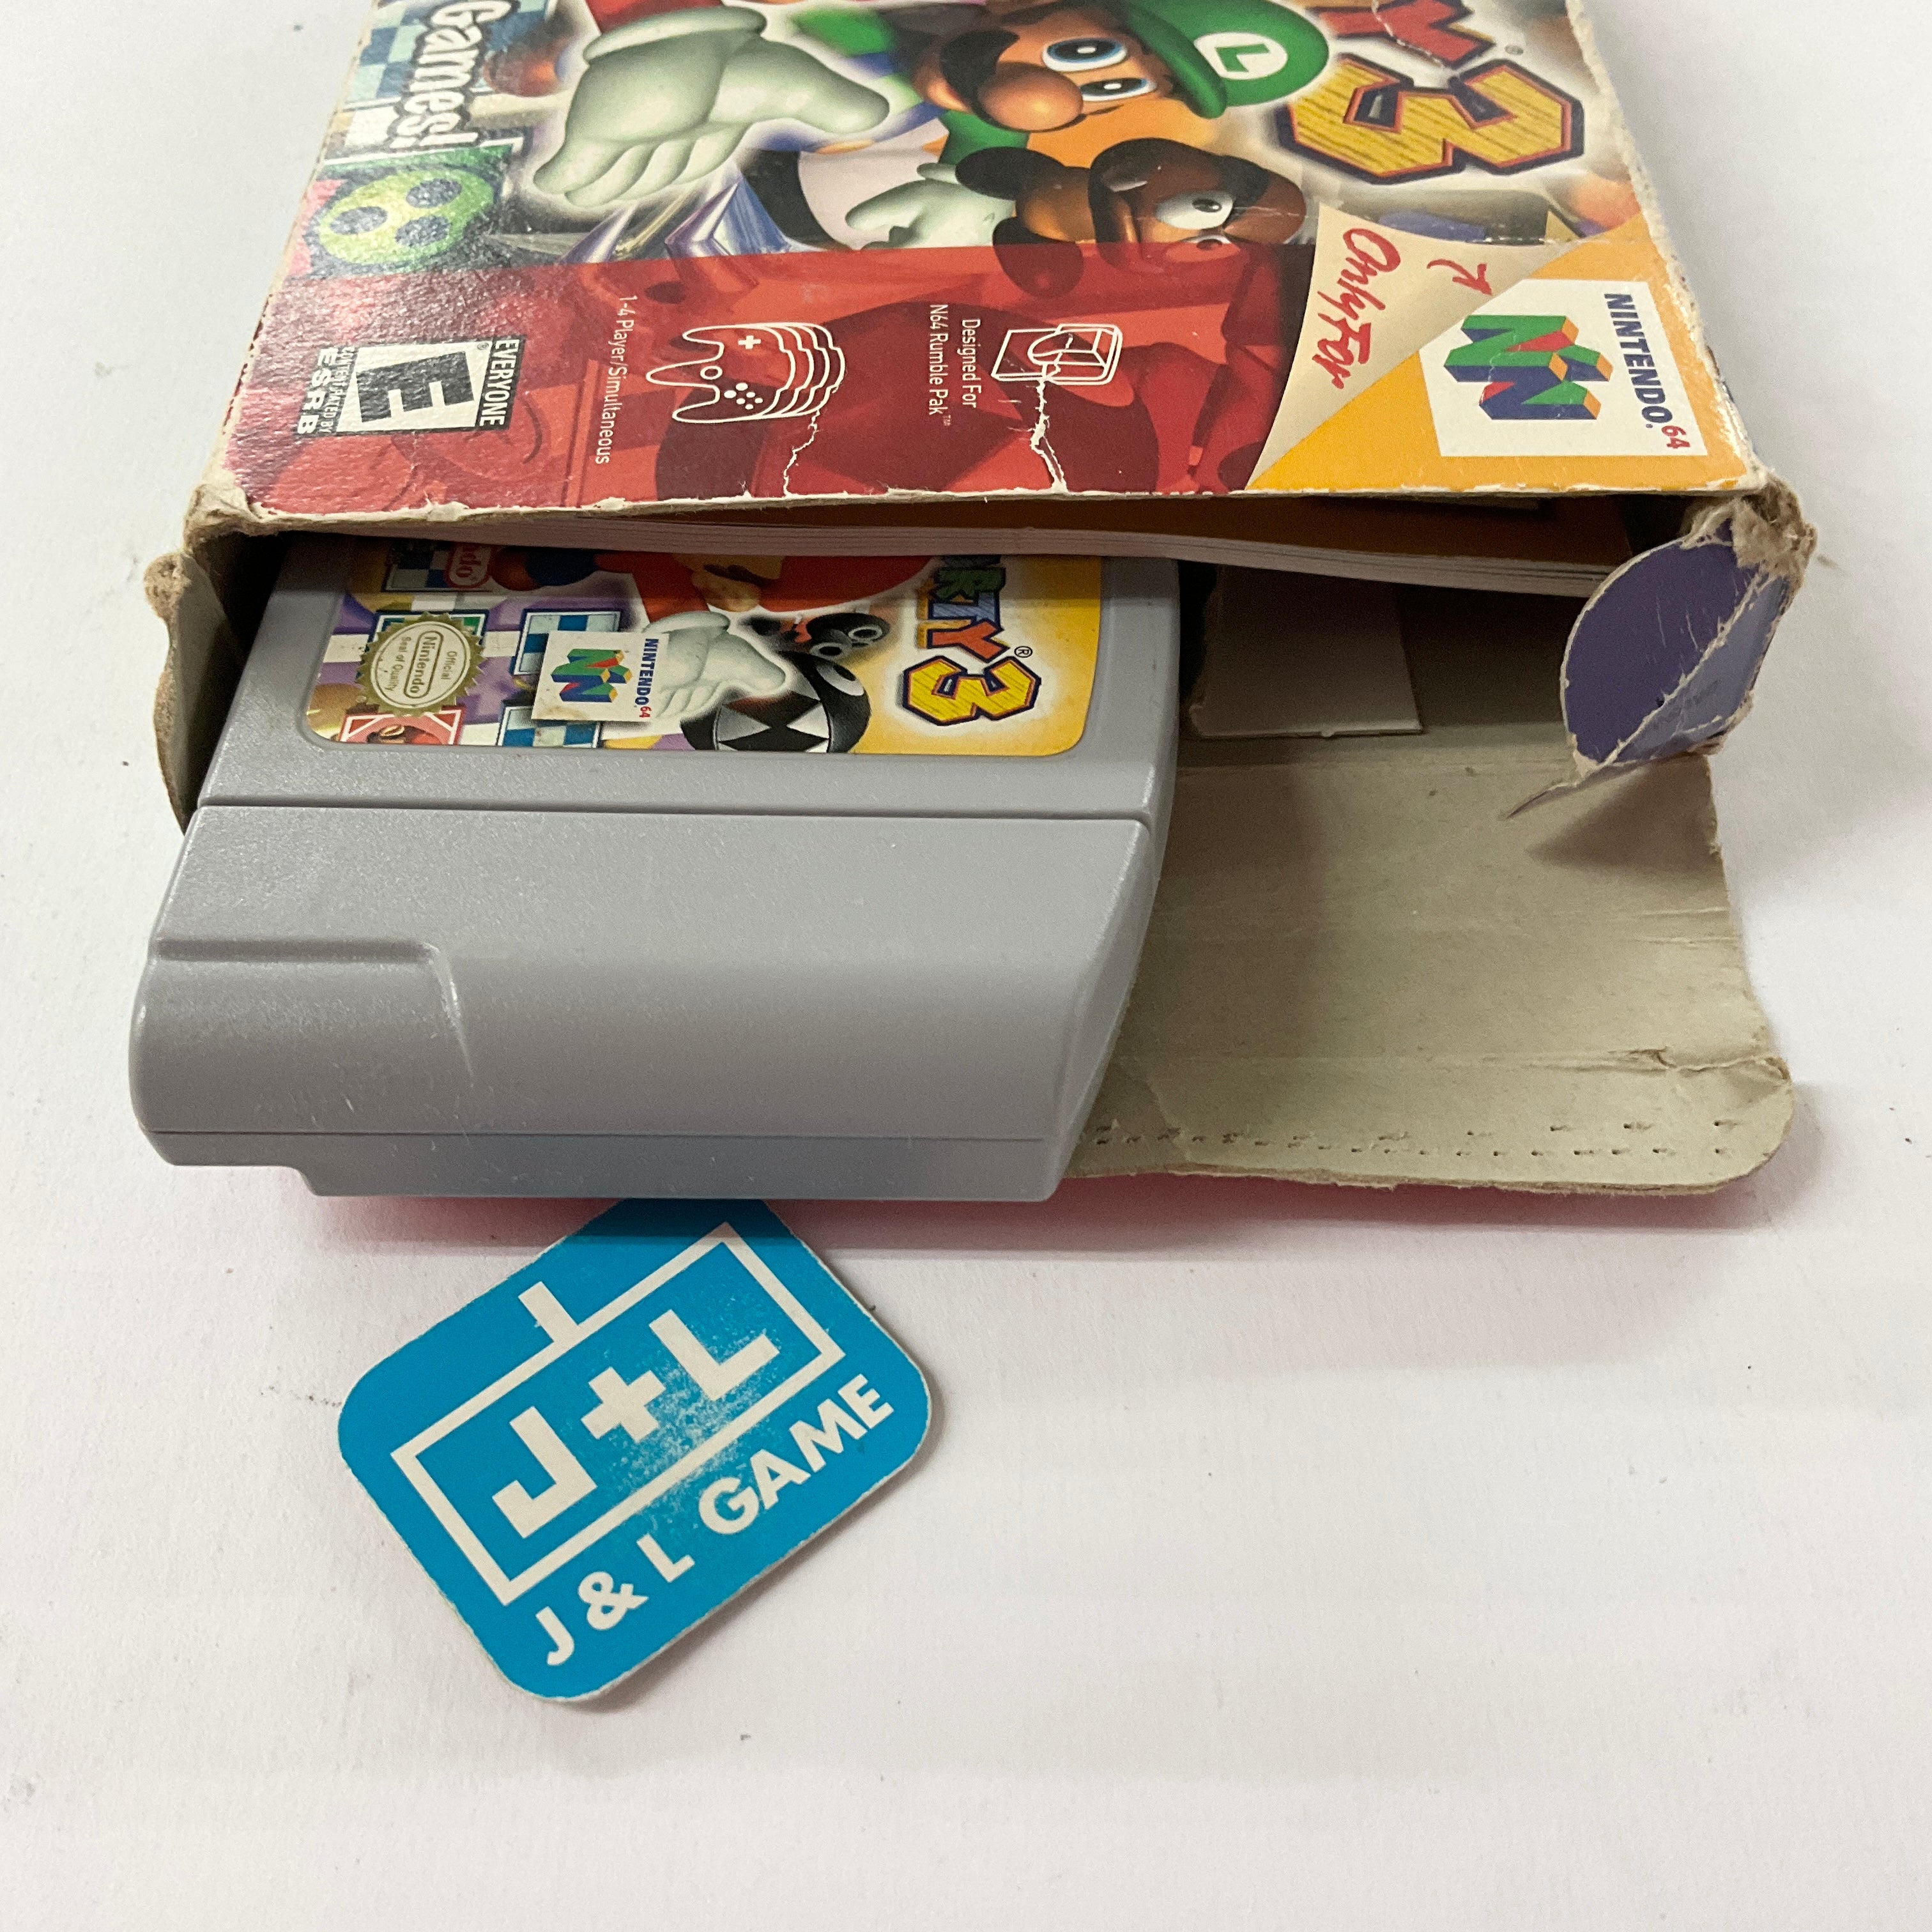 Mario Party 3 - (N64) Nintendo 64 [Pre-Owned] Video Games Nintendo   